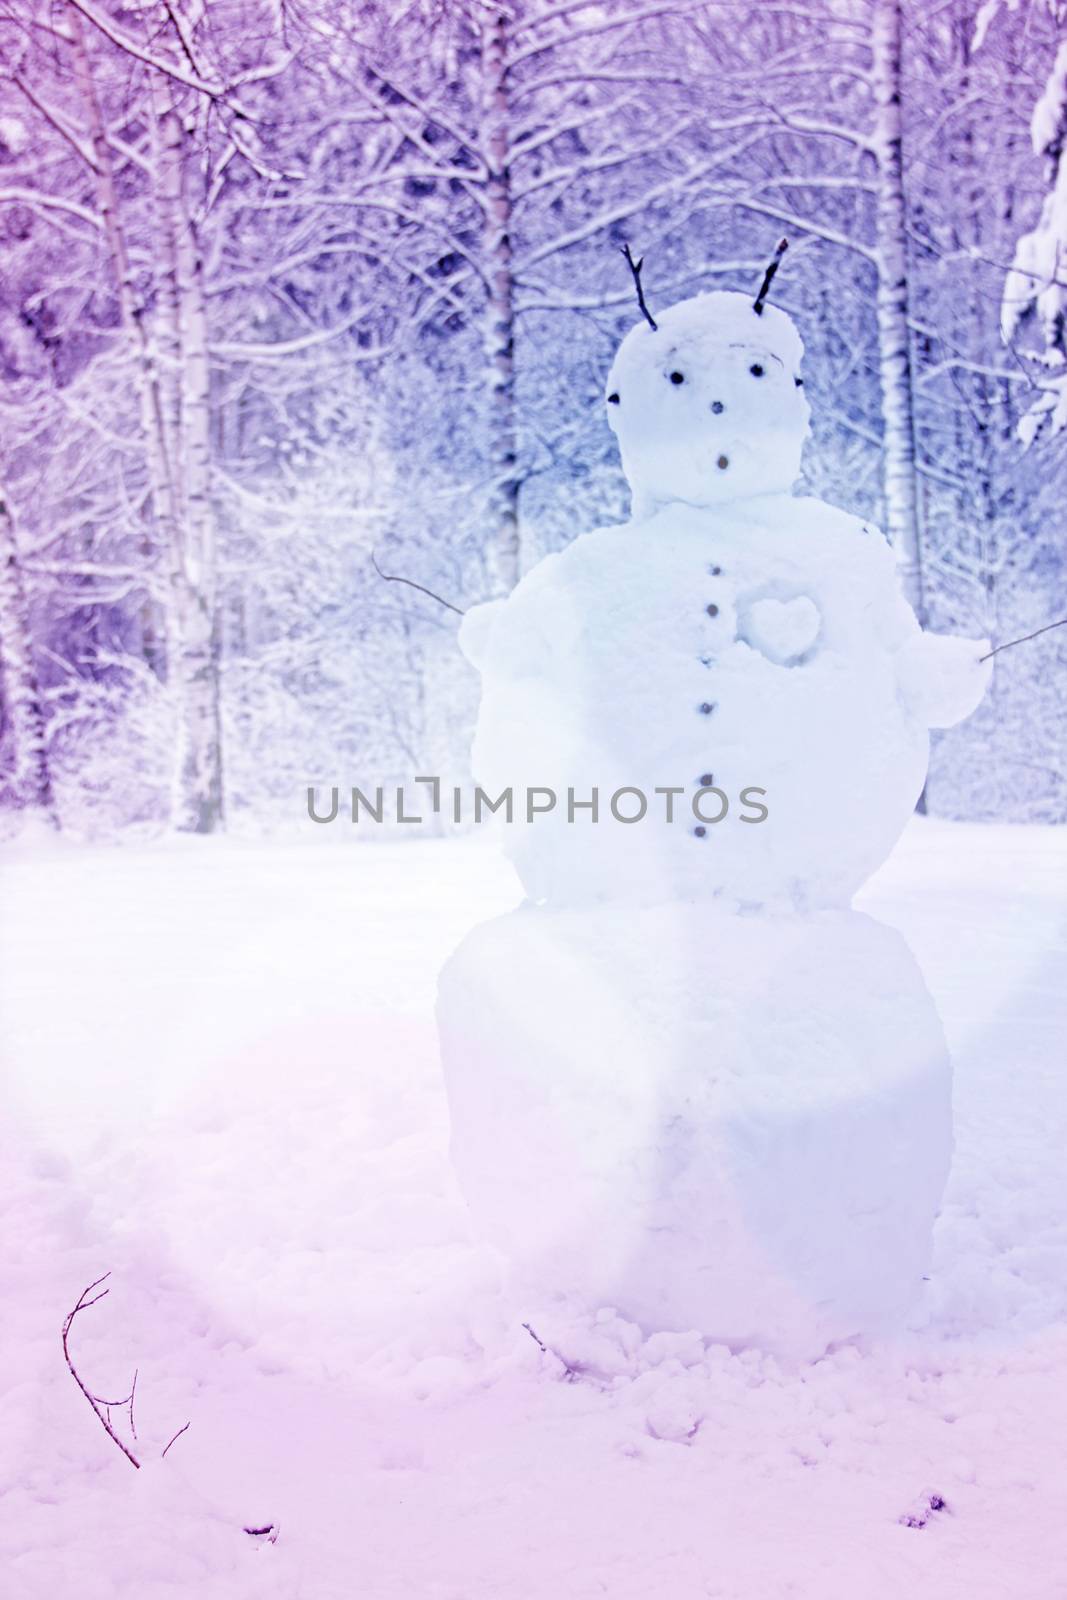 Snowman in winter park by destillat